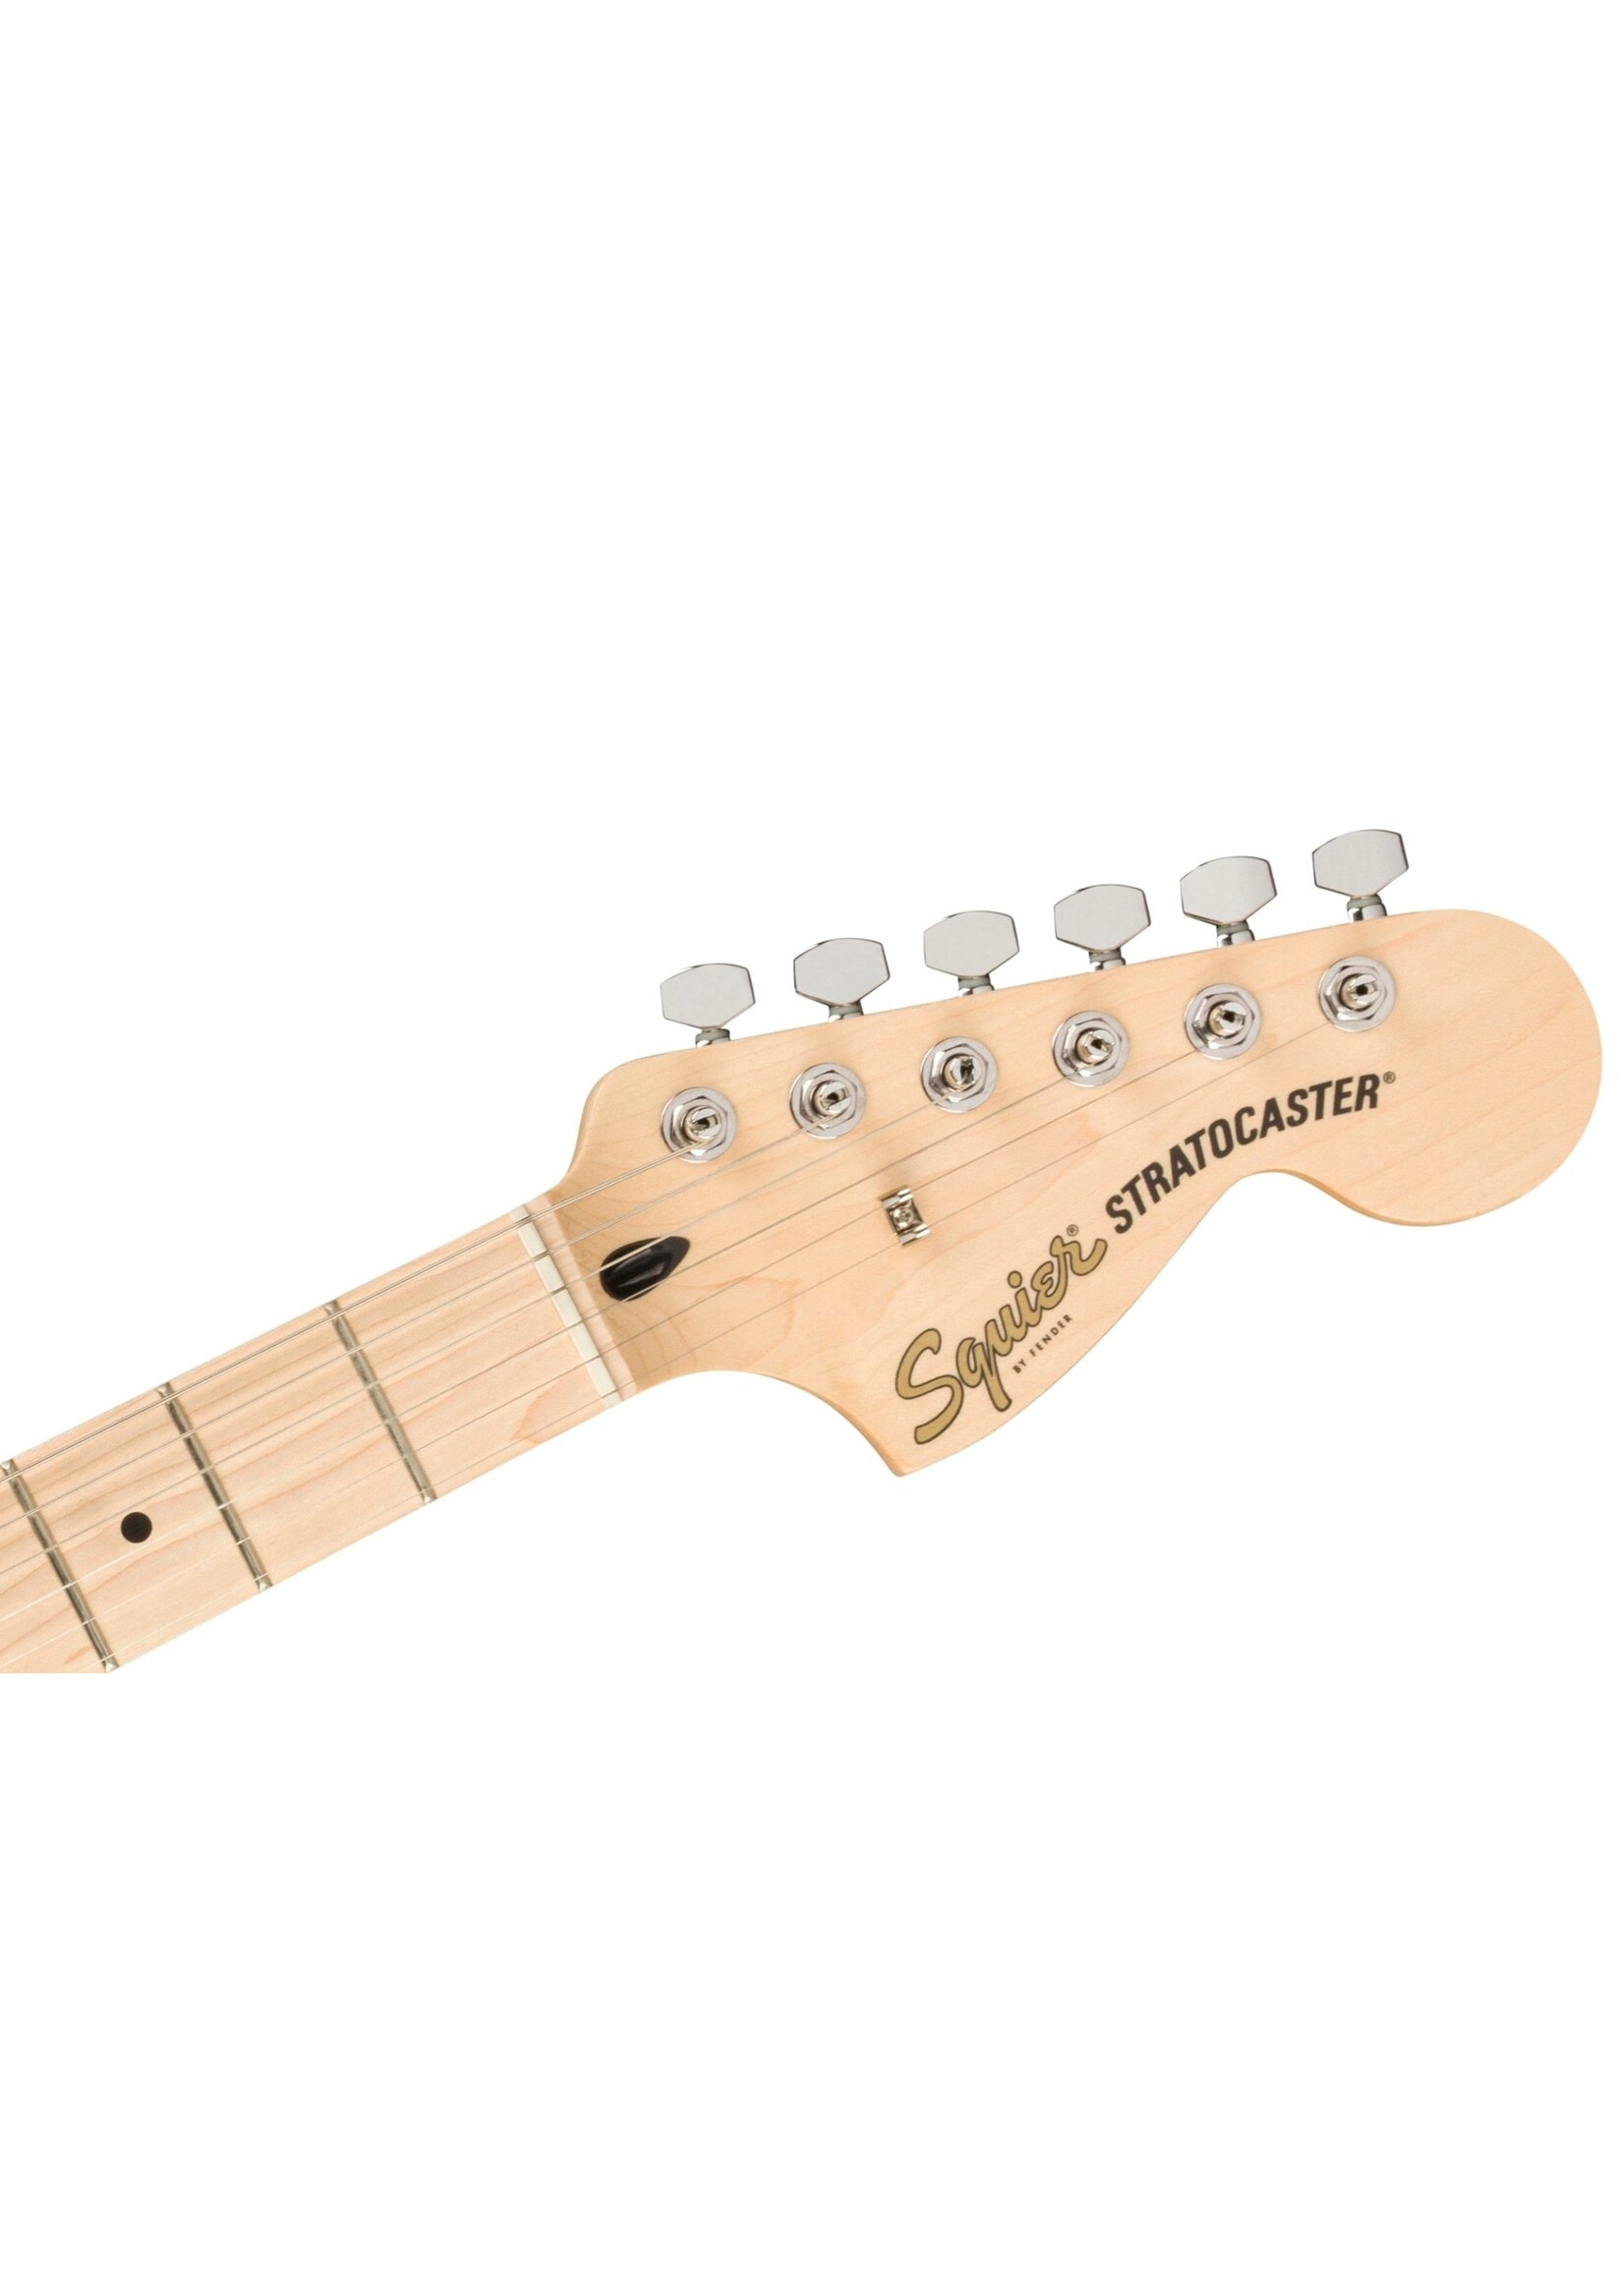 Squier Squier Affinity Series Stratocaster HSS Pack, Maple Fingerboard, Lake Placid Blue, Gig Bag, 15G - 120V